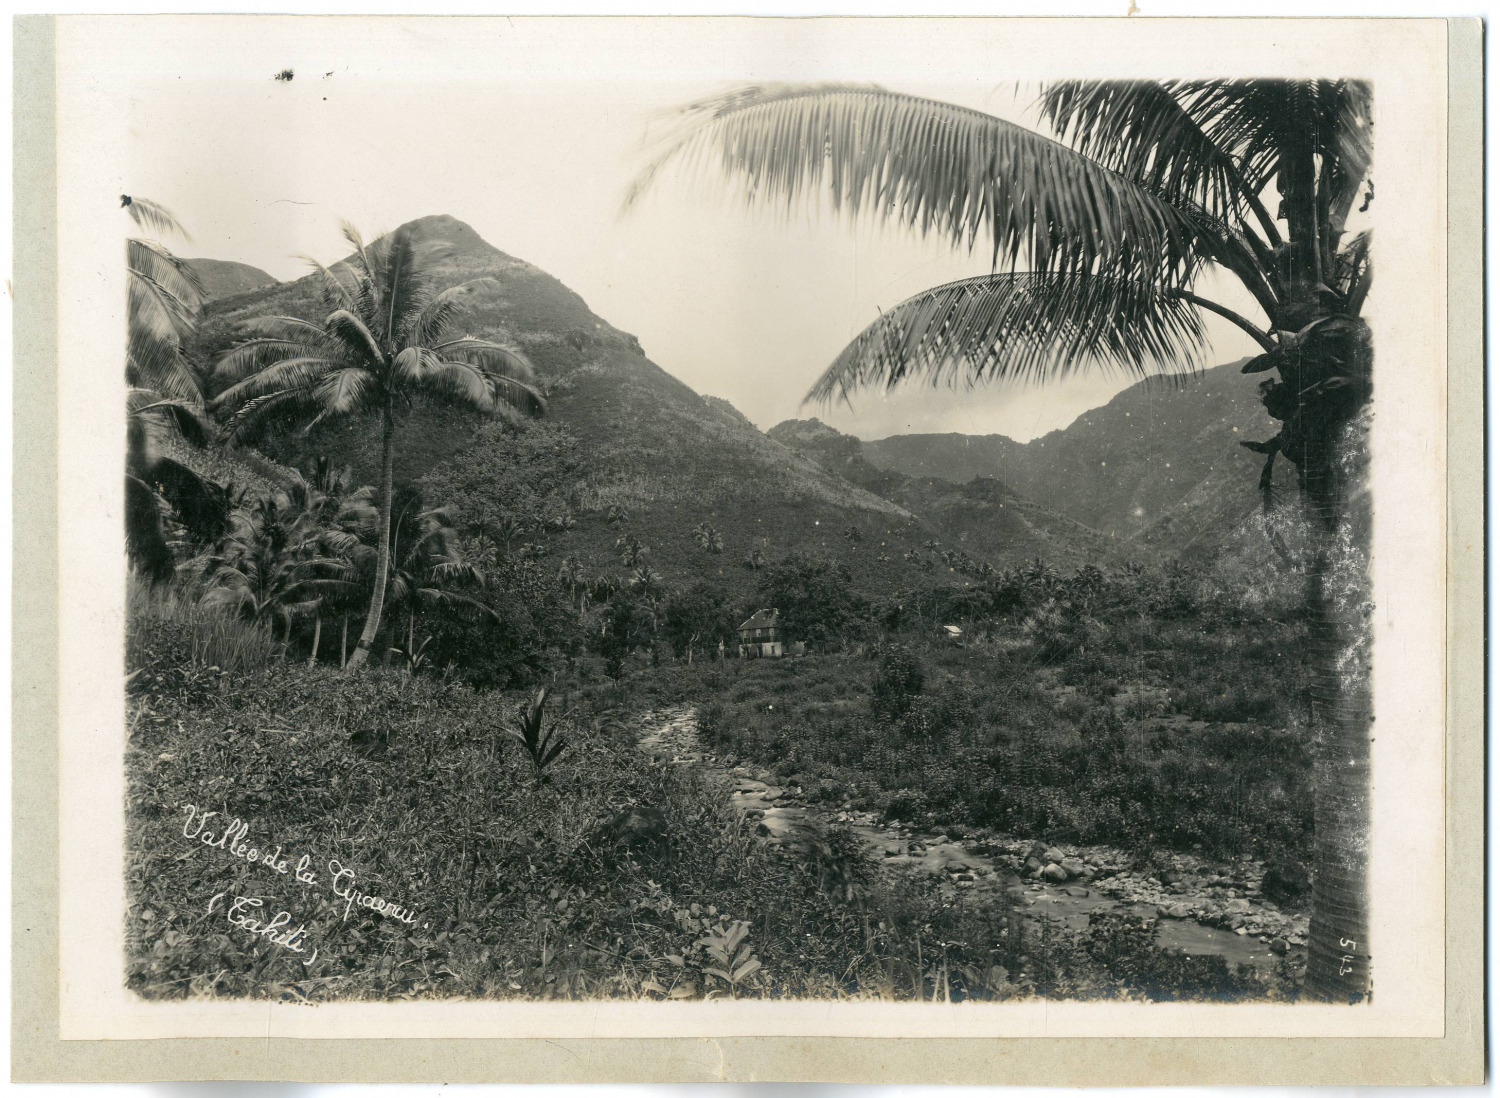 Gauthier Tahiti, Papeete, Diadome Vintage Print, Silver Print 17x22